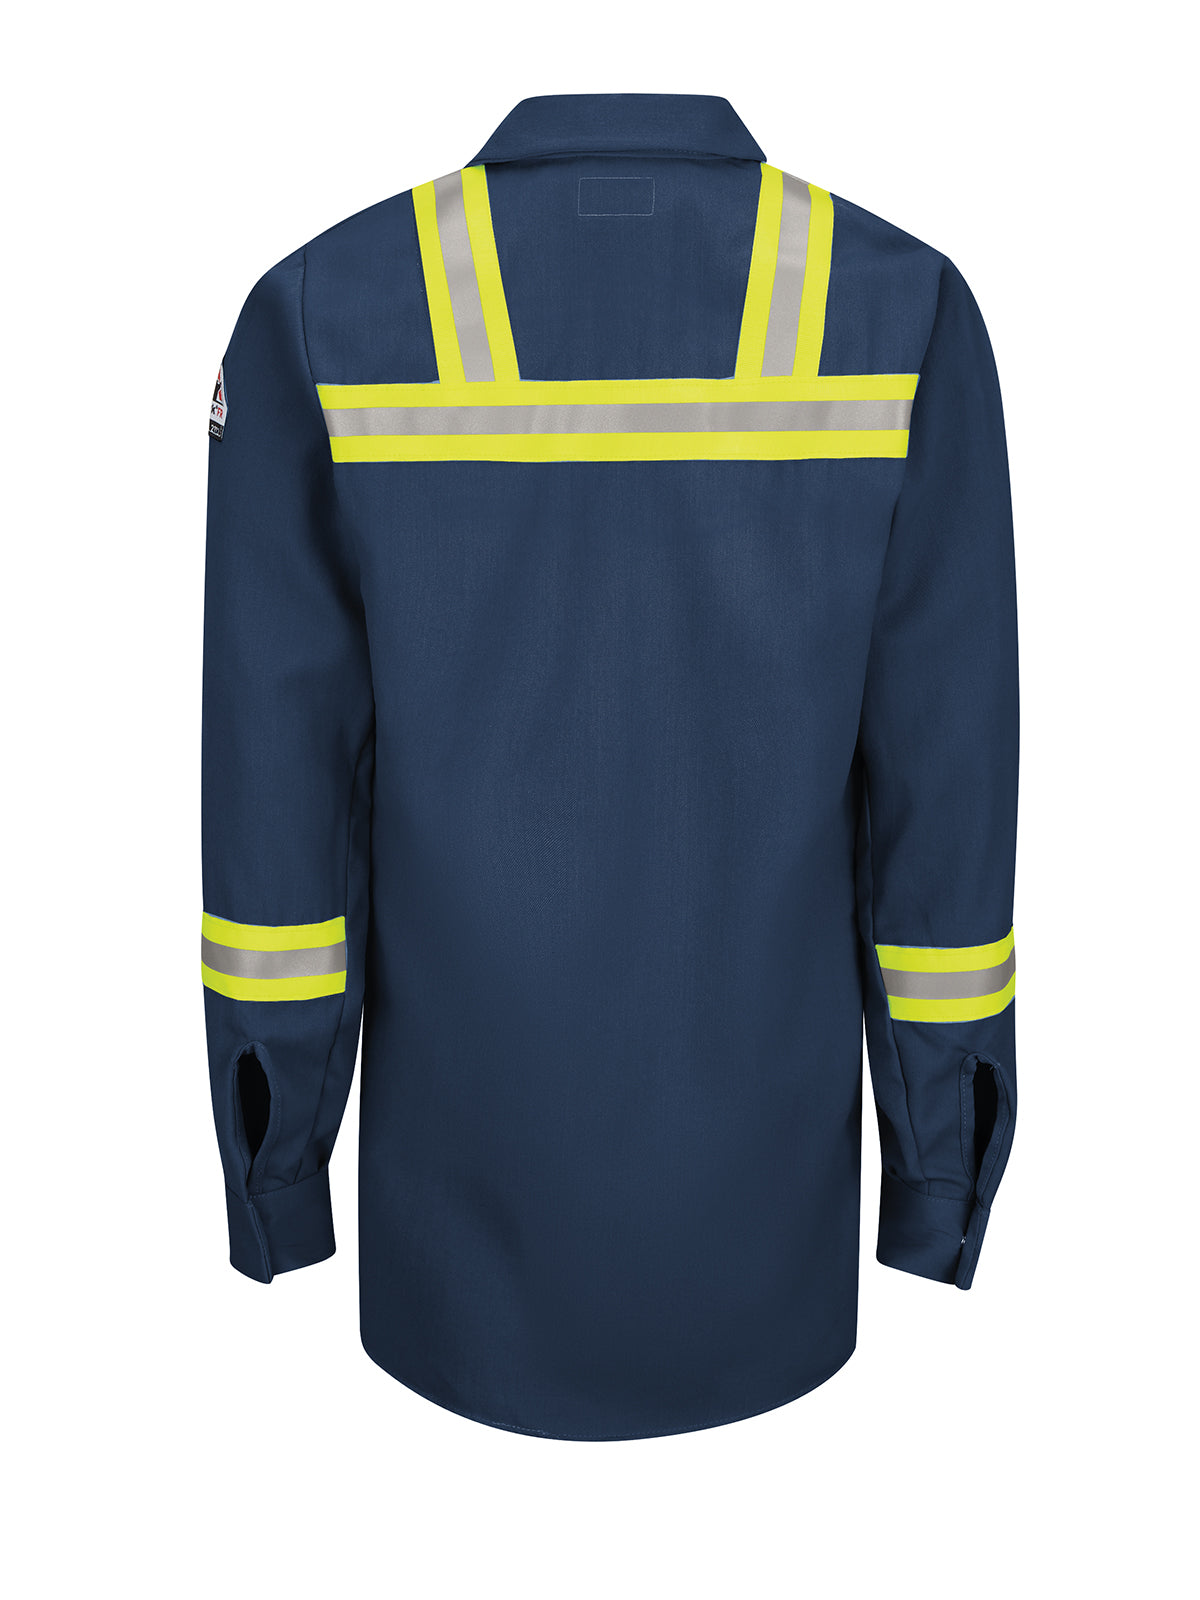 Unisex Enhanced Visibility Concealed-Gripper Pocketless Work Shirt - SMS6 - Navy